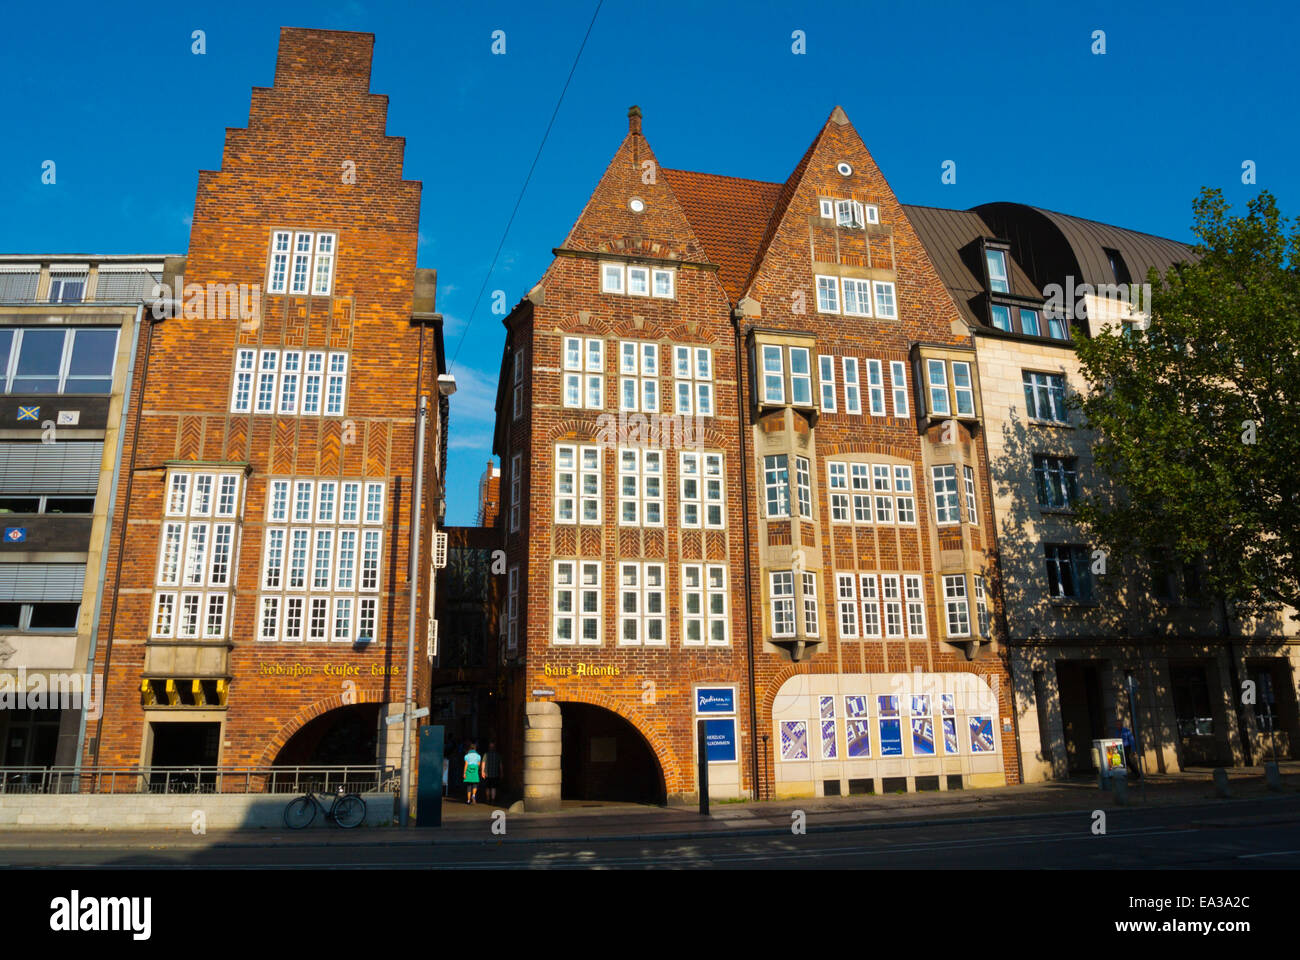 Robinson Crusoe house and Atlantis house, Böttcherstrasse street, Altstadt, old town, Bremen, Germany Stock Photo